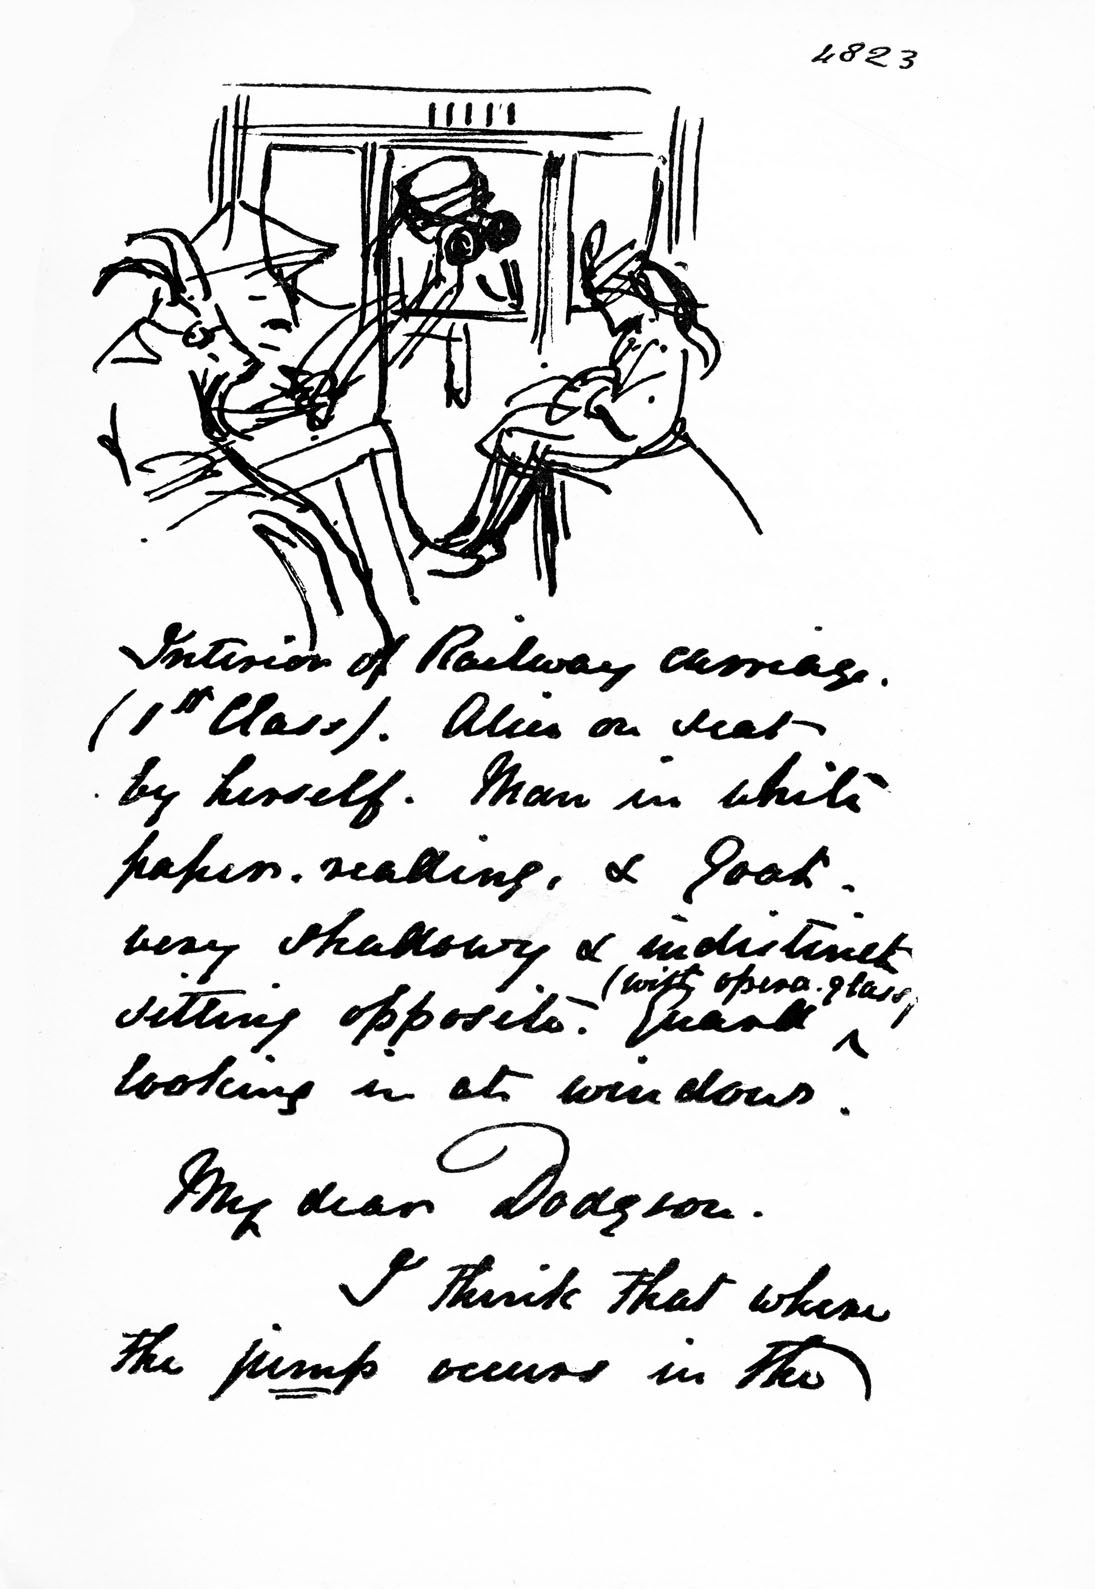 John Tenniel 's letter to Lewis Carroll